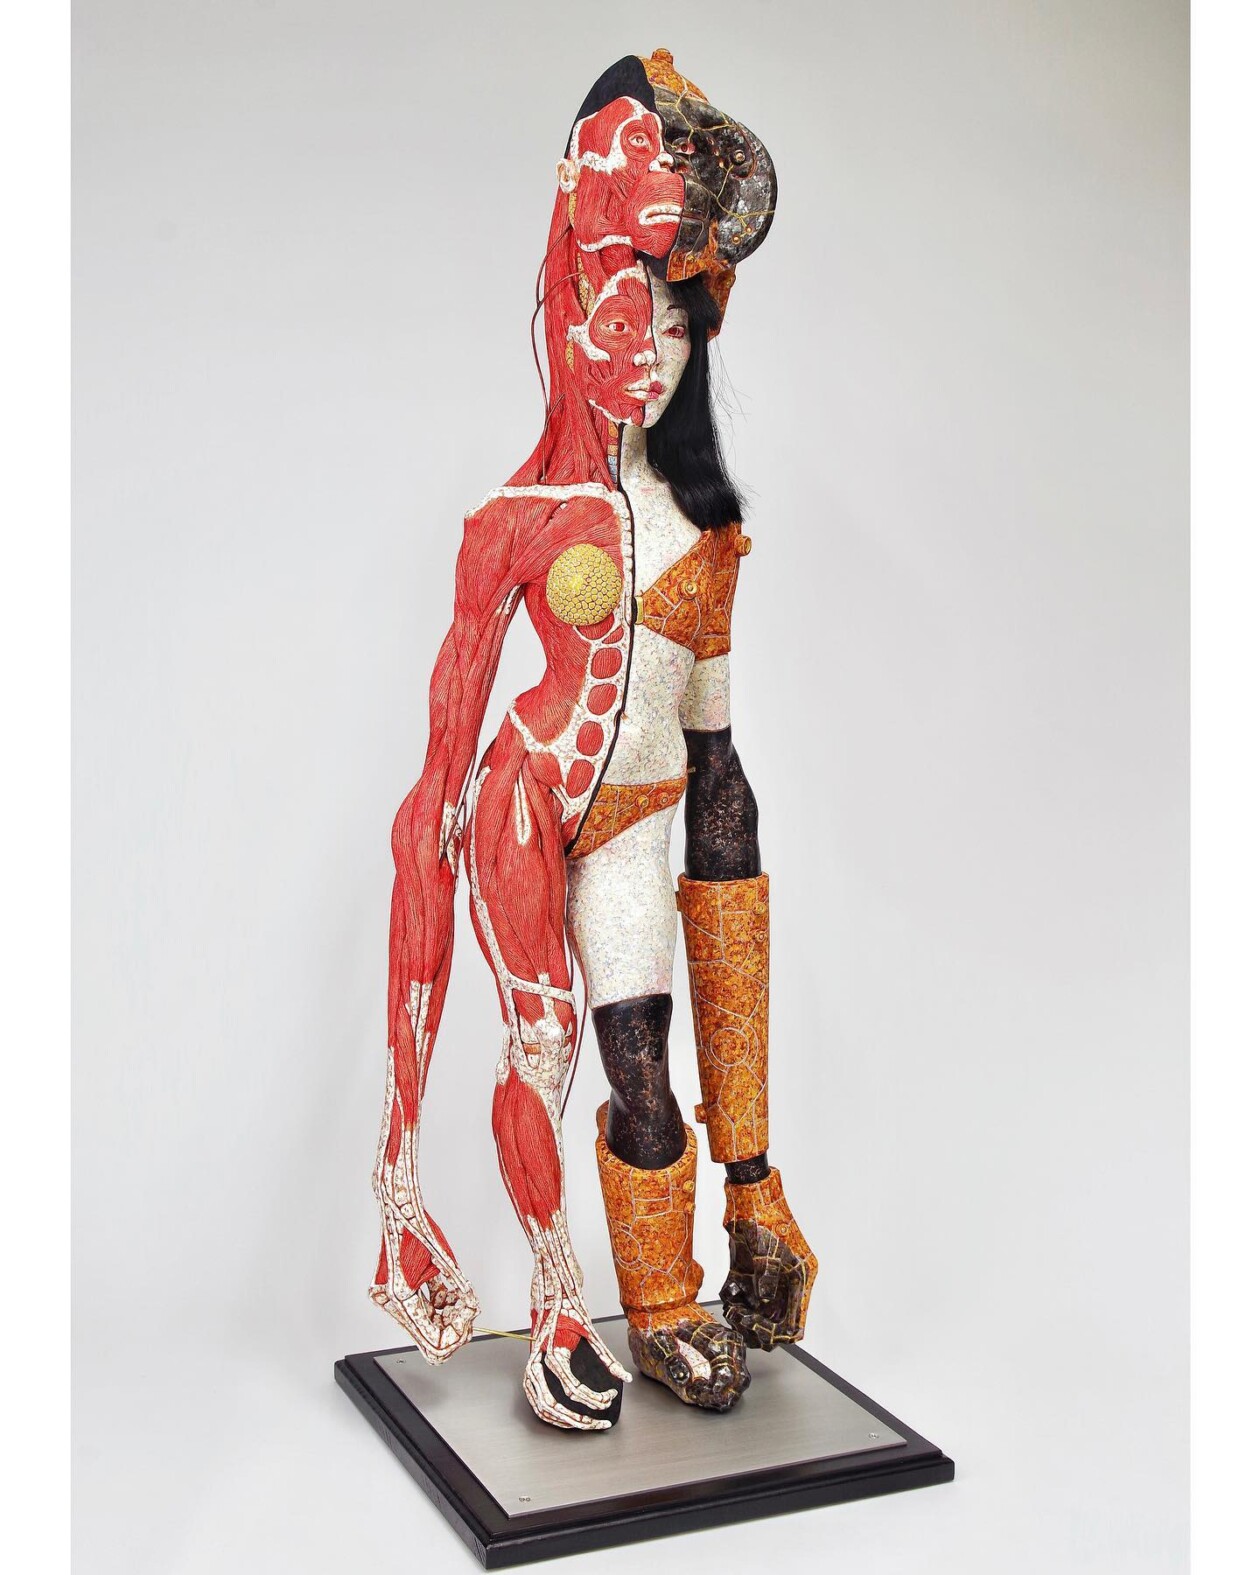 Masao Kinoshita’s Sculptures Explore Myth, Religion, And The Human Form (16)